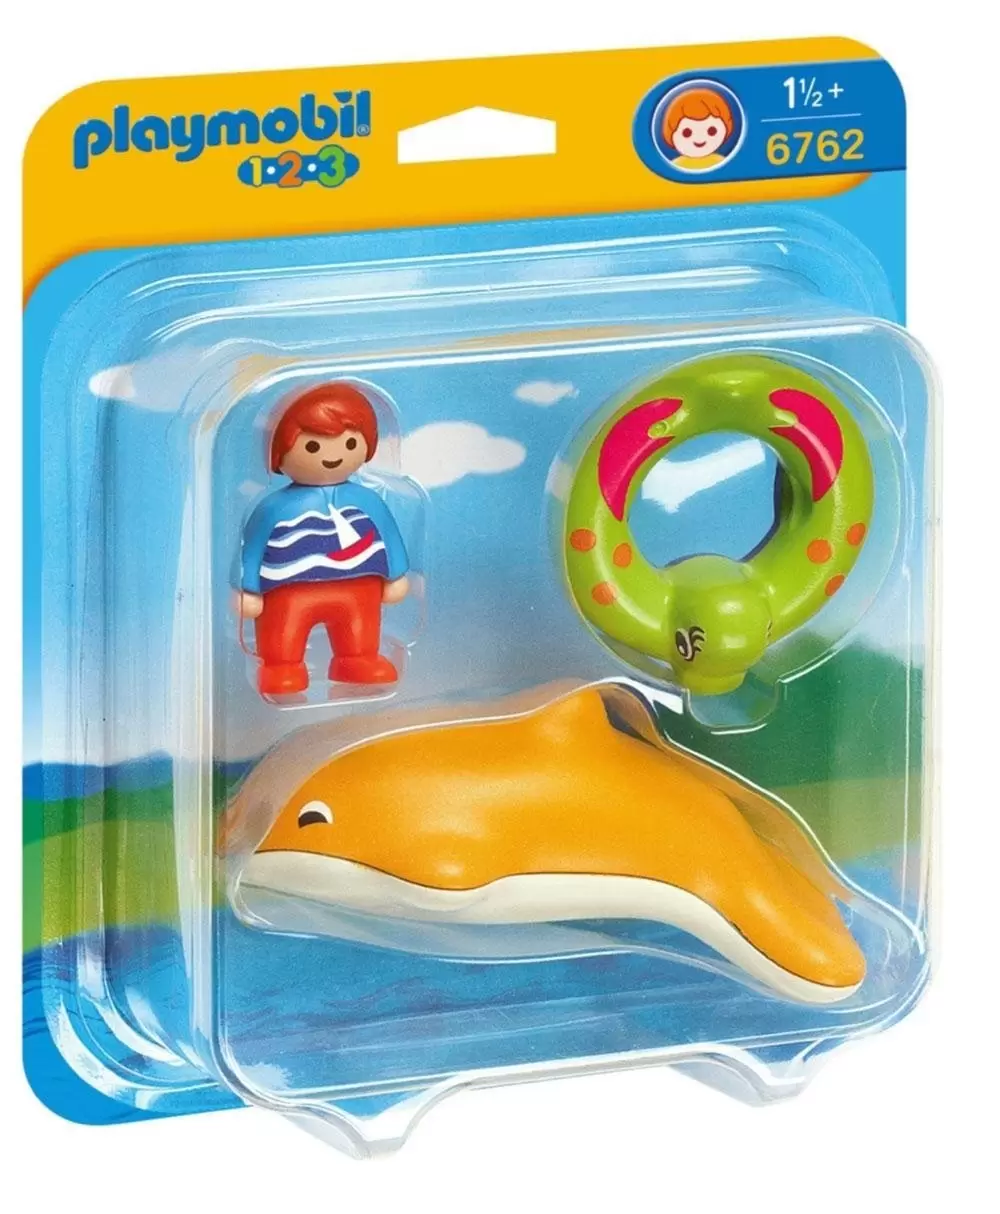 Garçon avec dauphin et bouée - Playmobil 1.2.3 6762